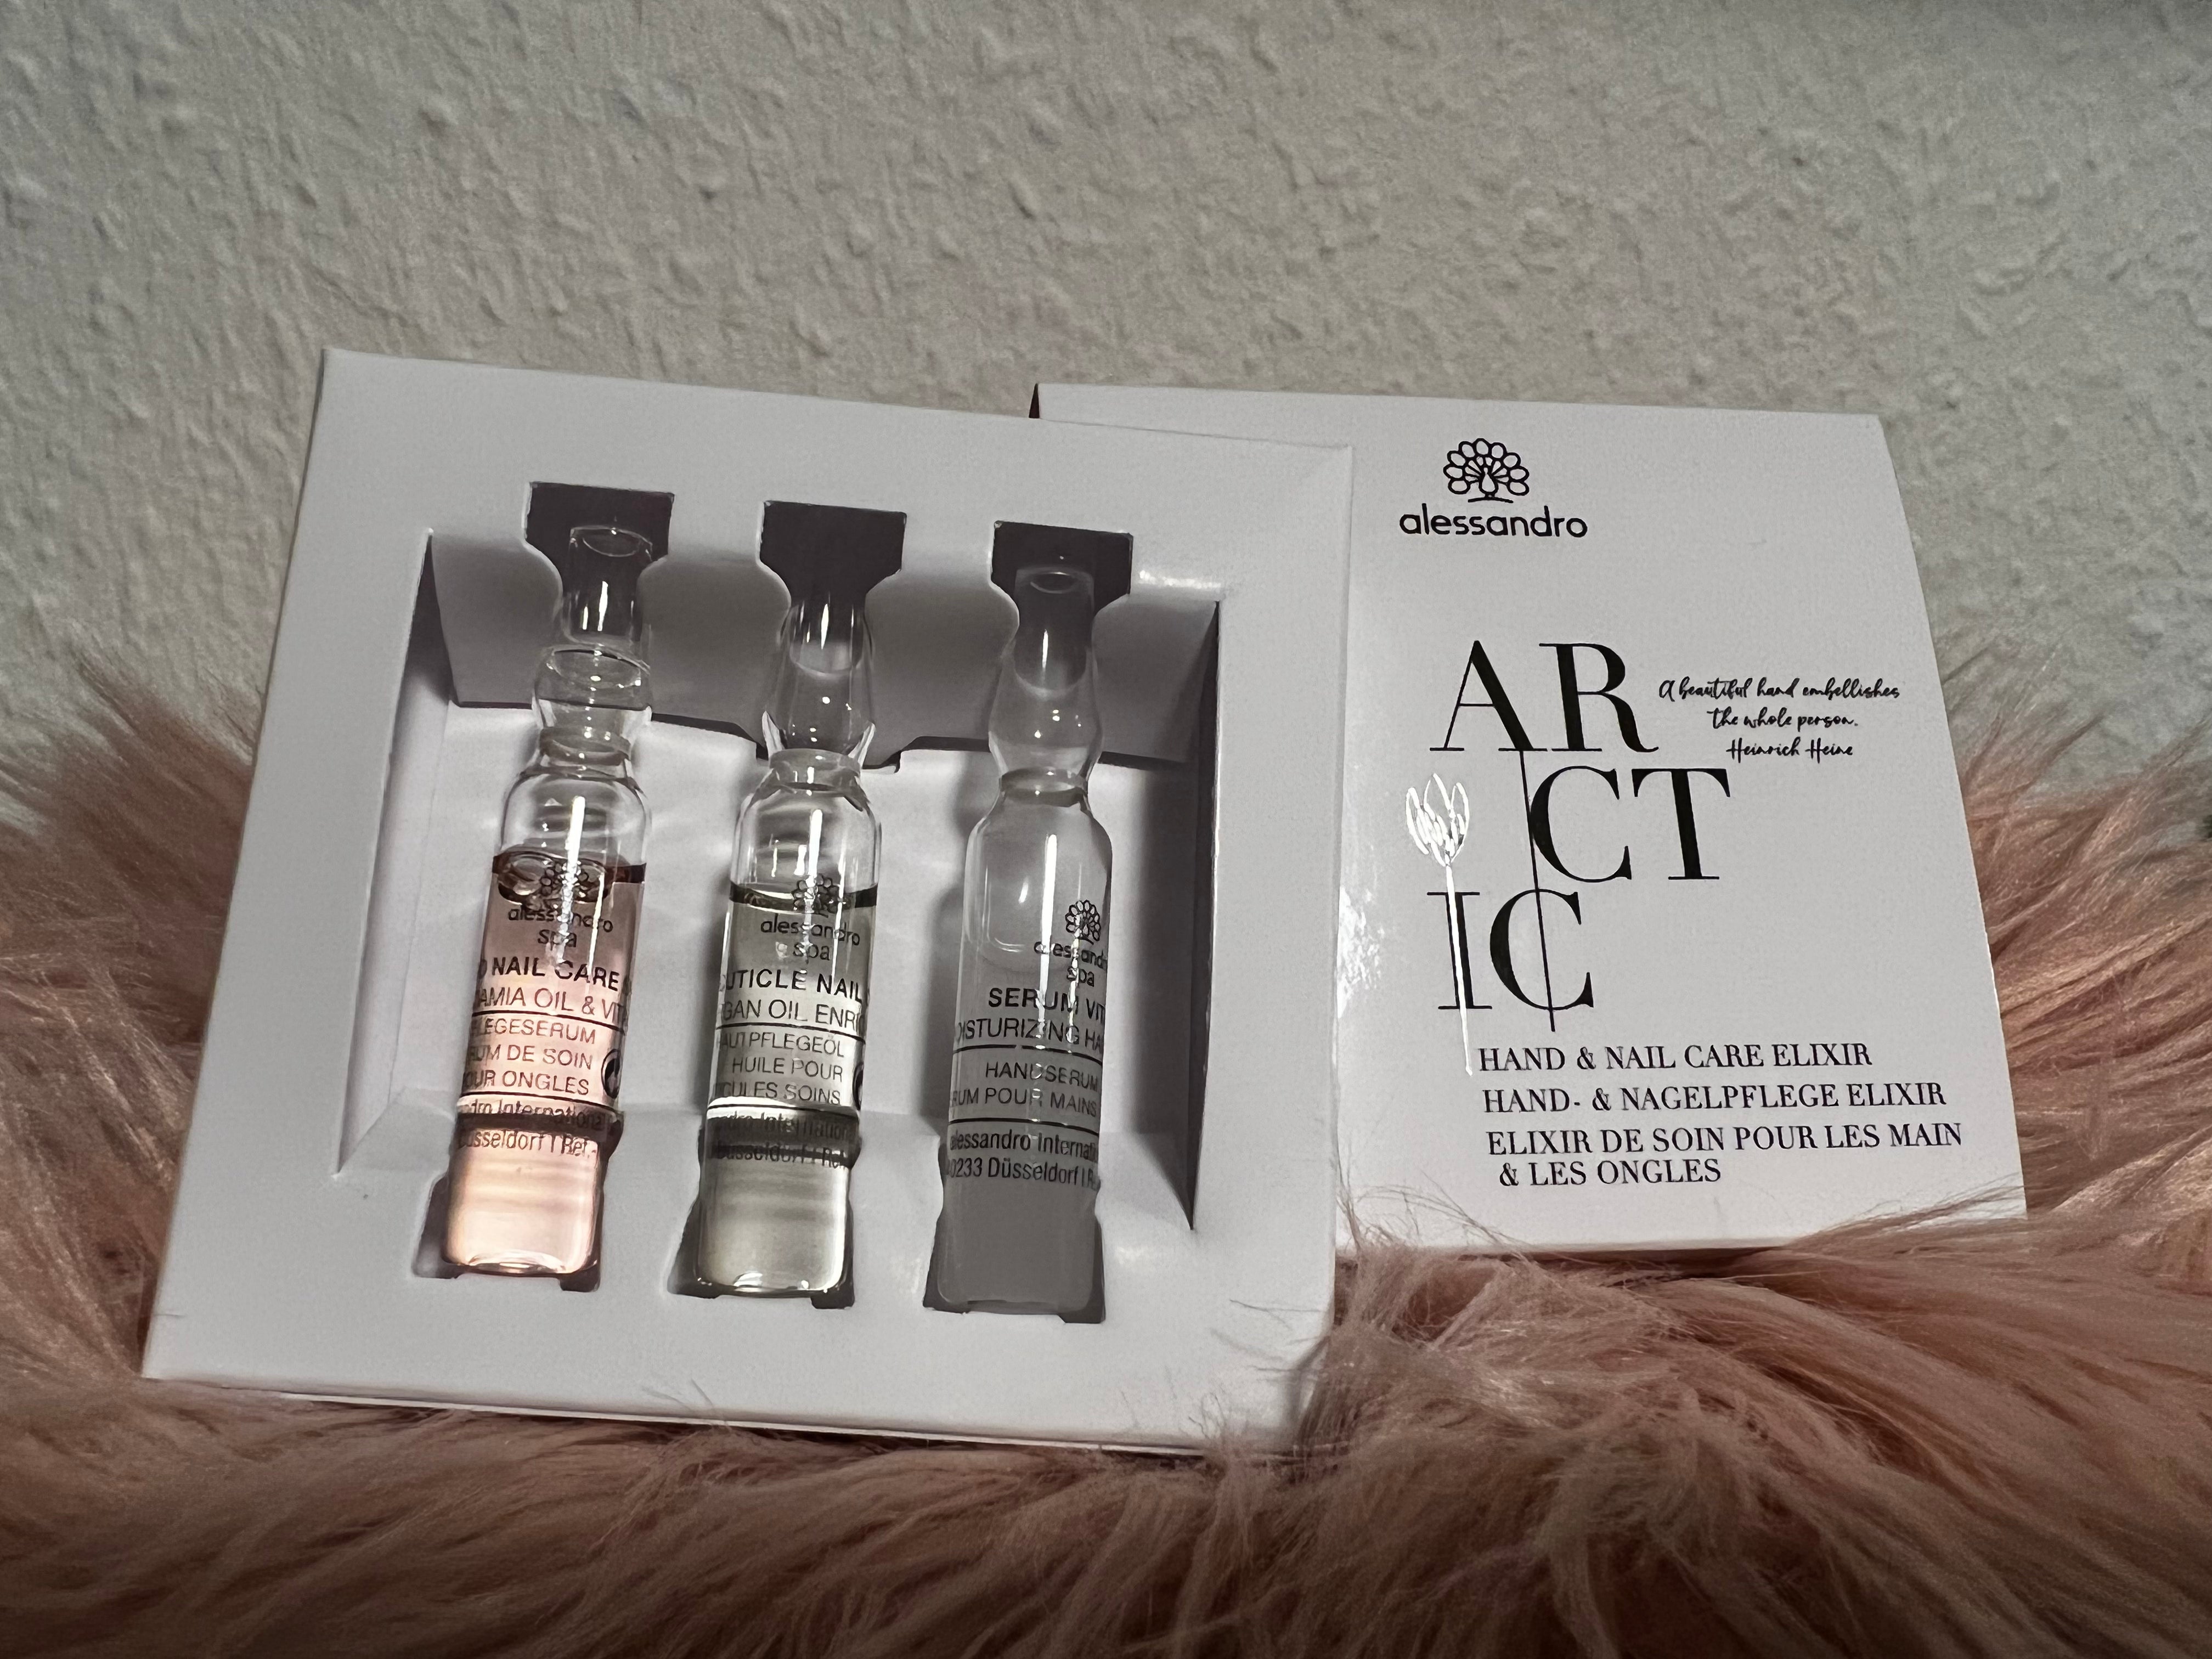 Arctic Care Körperkult – Elixir Nail Alessandro & kaufen Hand